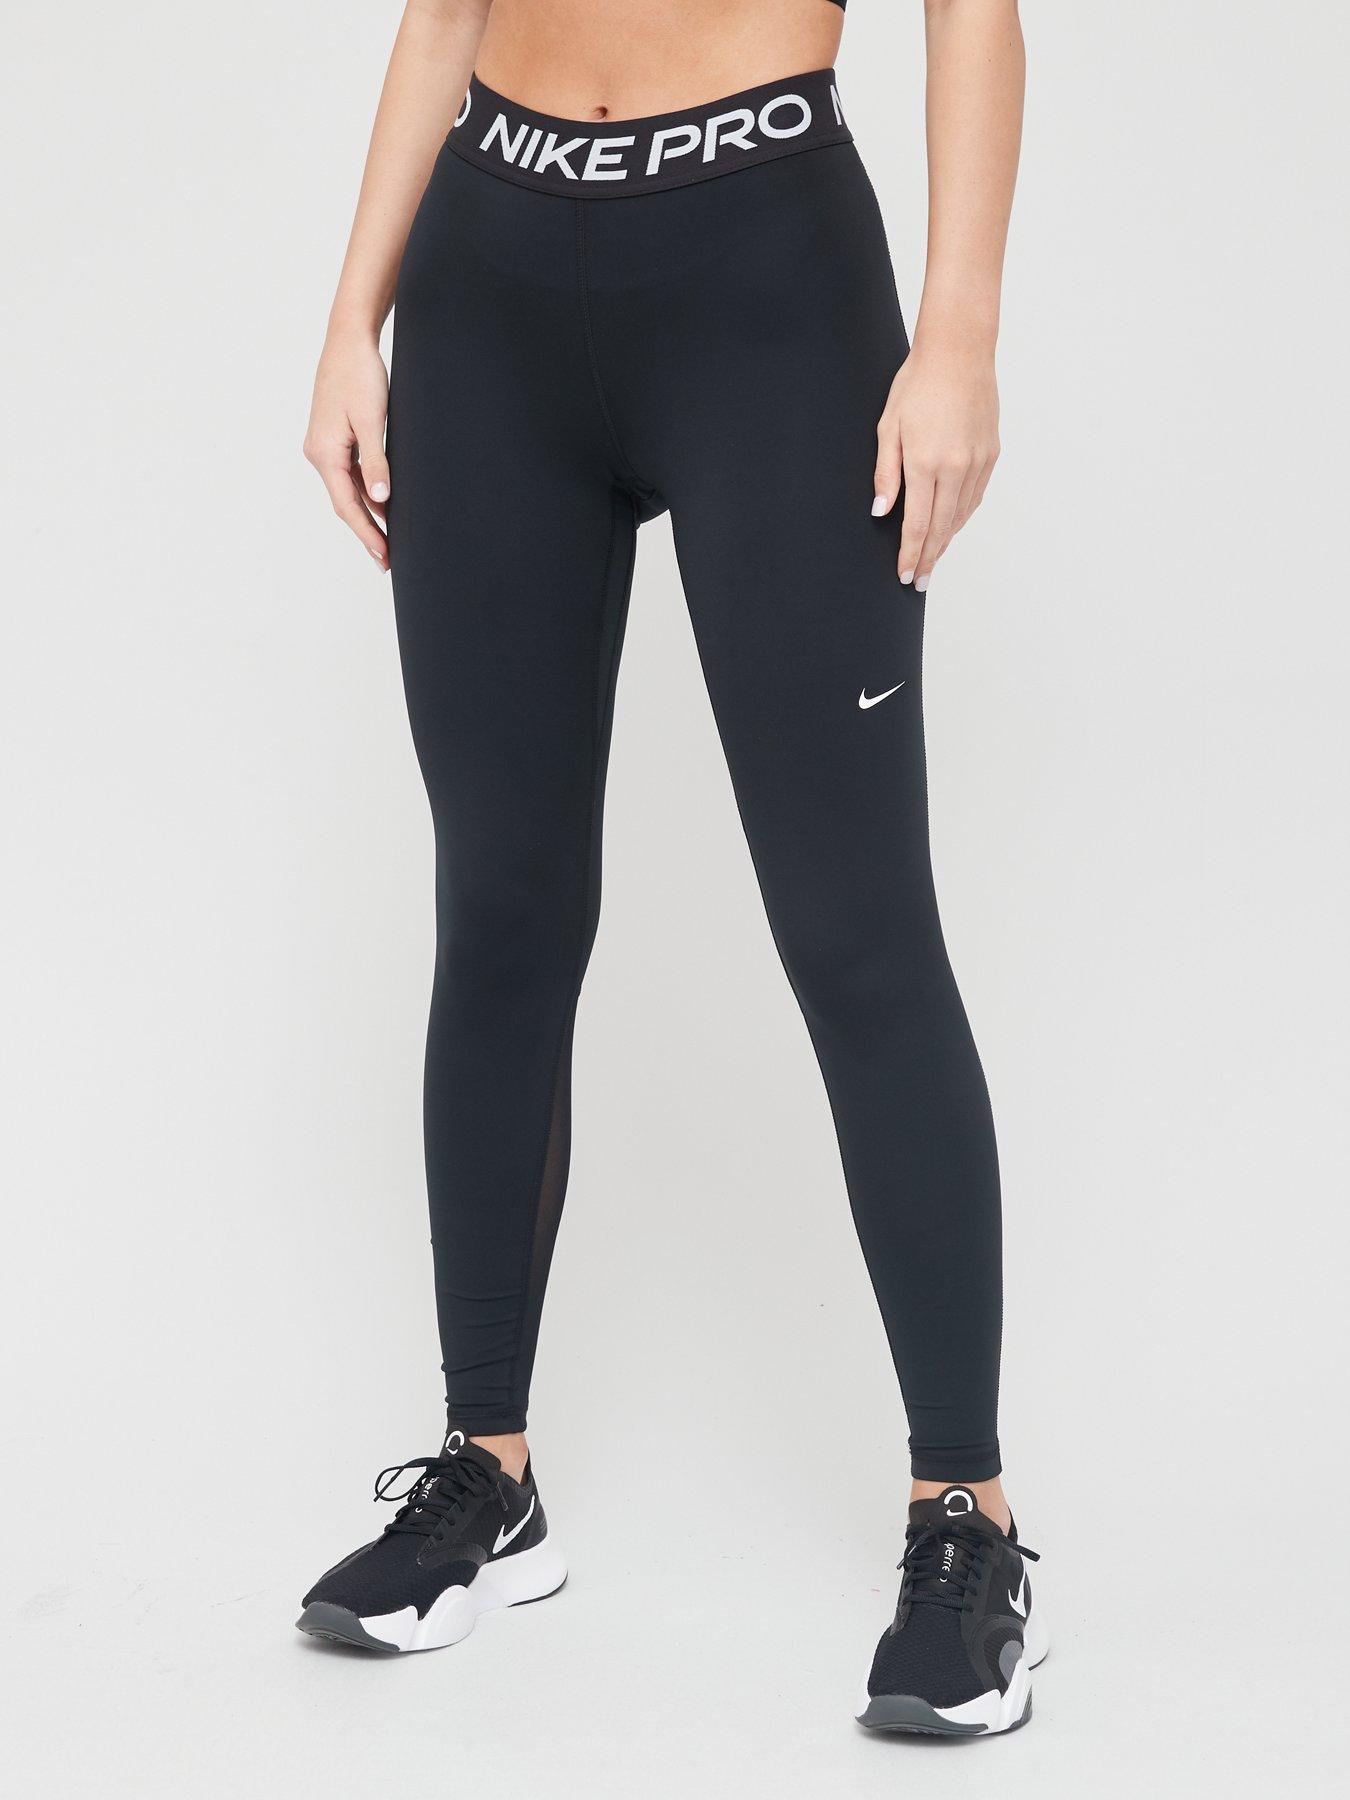 Nike NSW Essential Just Do It Leggings - Black